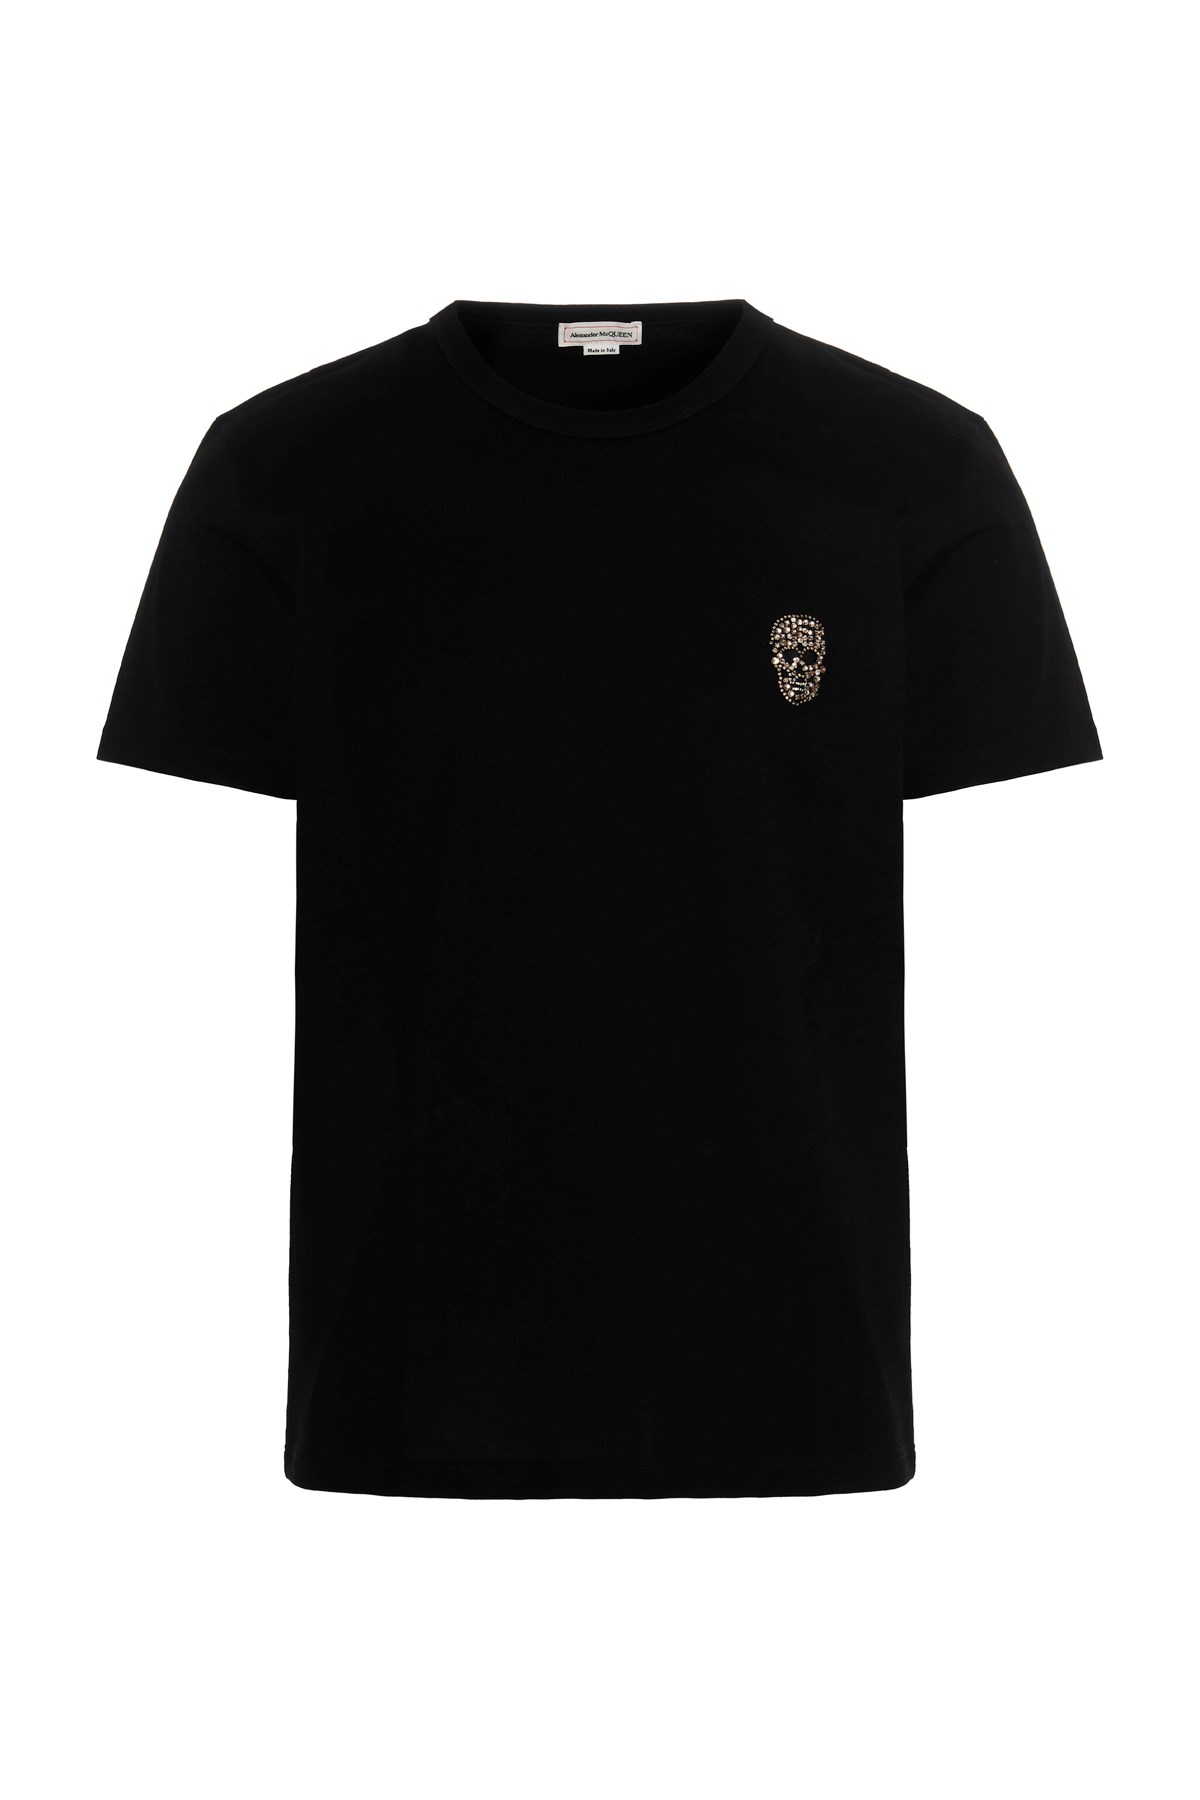 ALEXANDER MCQUEEN Jewel Skull Logo T-Shirt